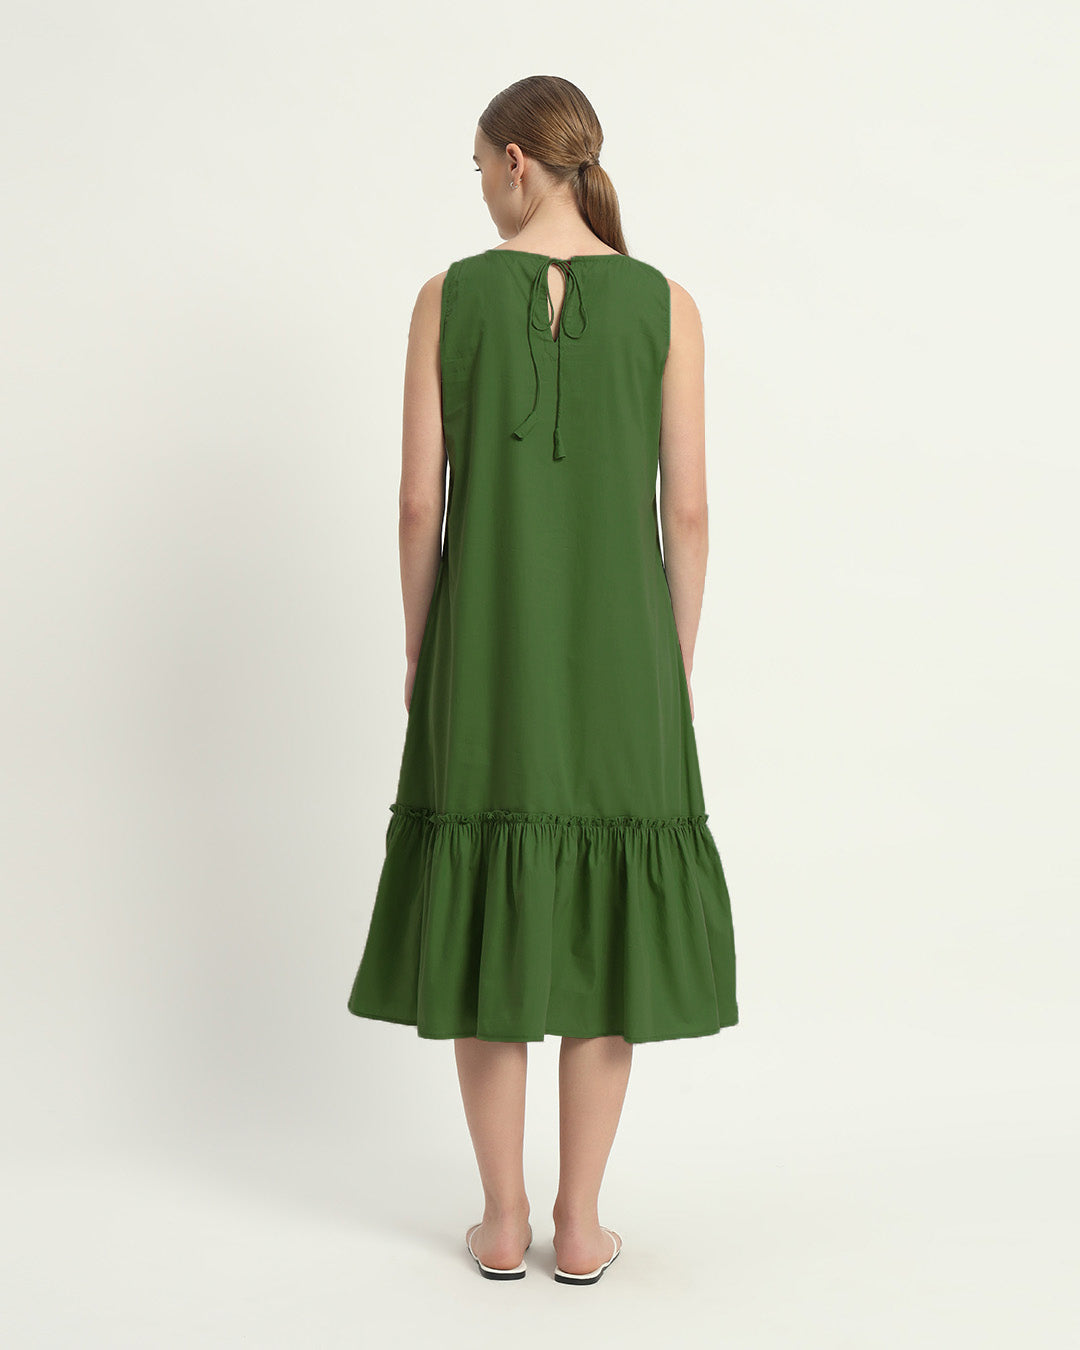 The Emerald Millis Cotton Dress